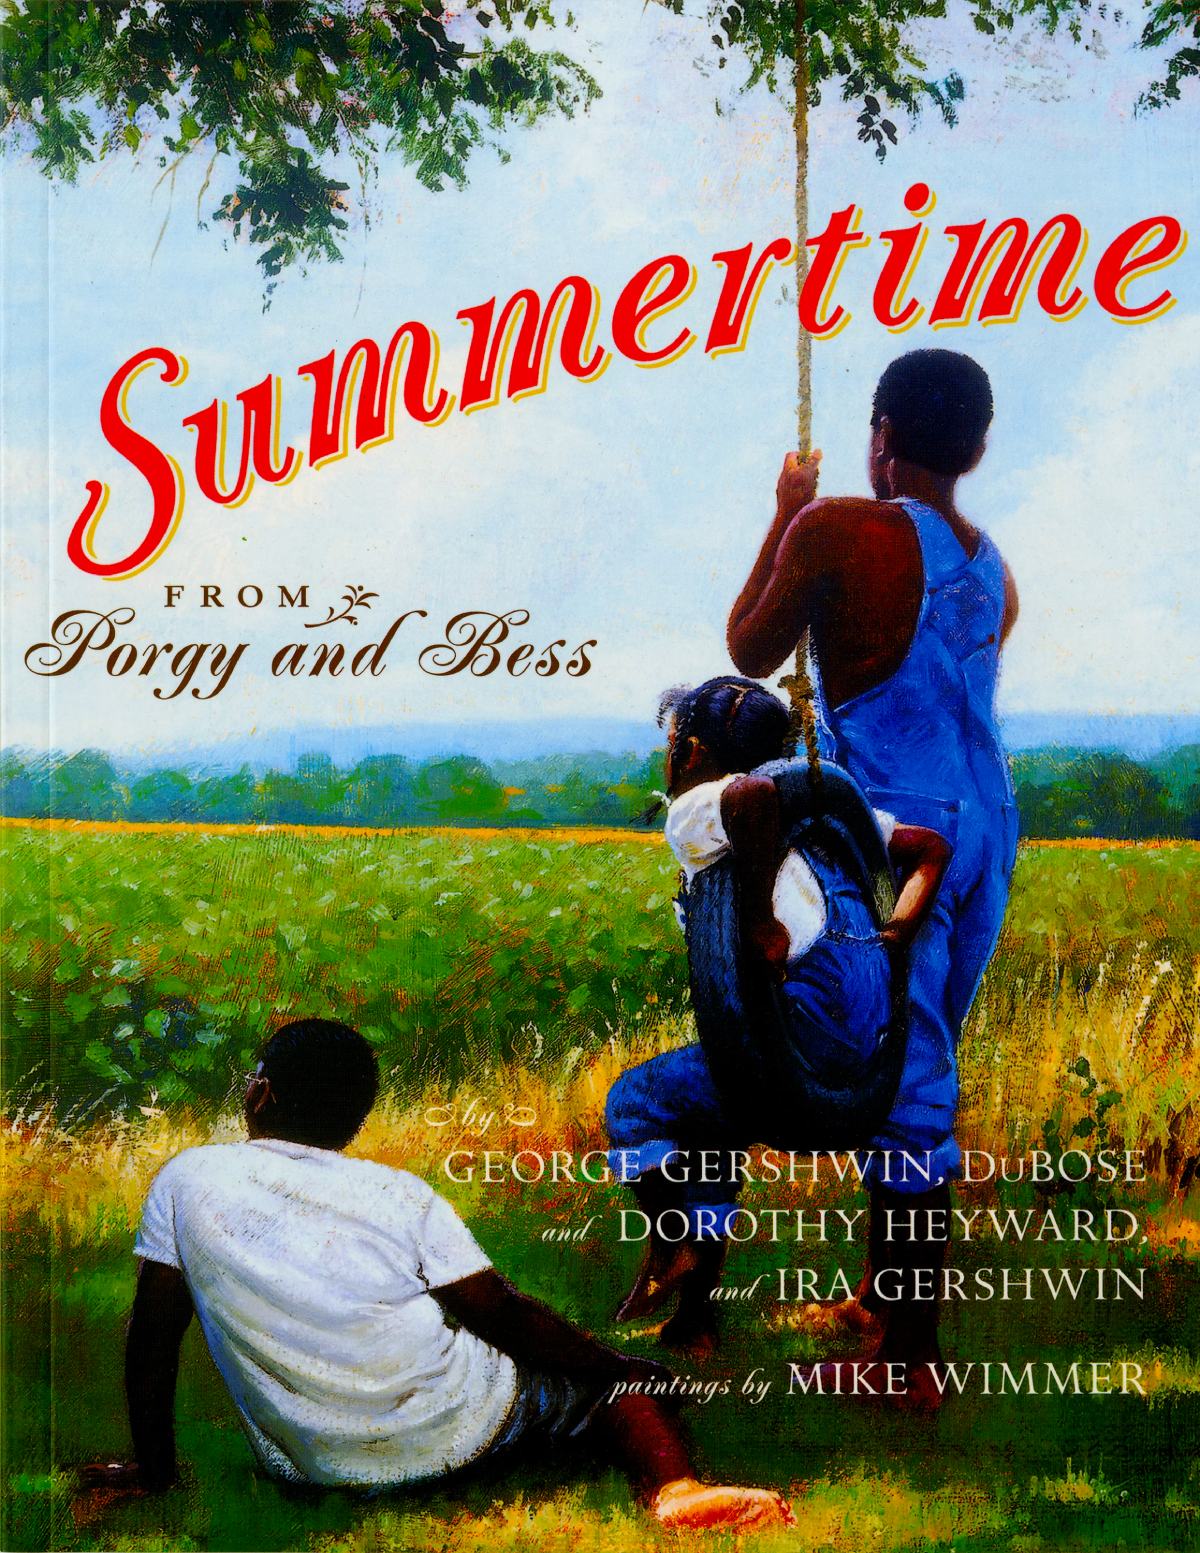 Reprise de "Summertime" de George Gershwin